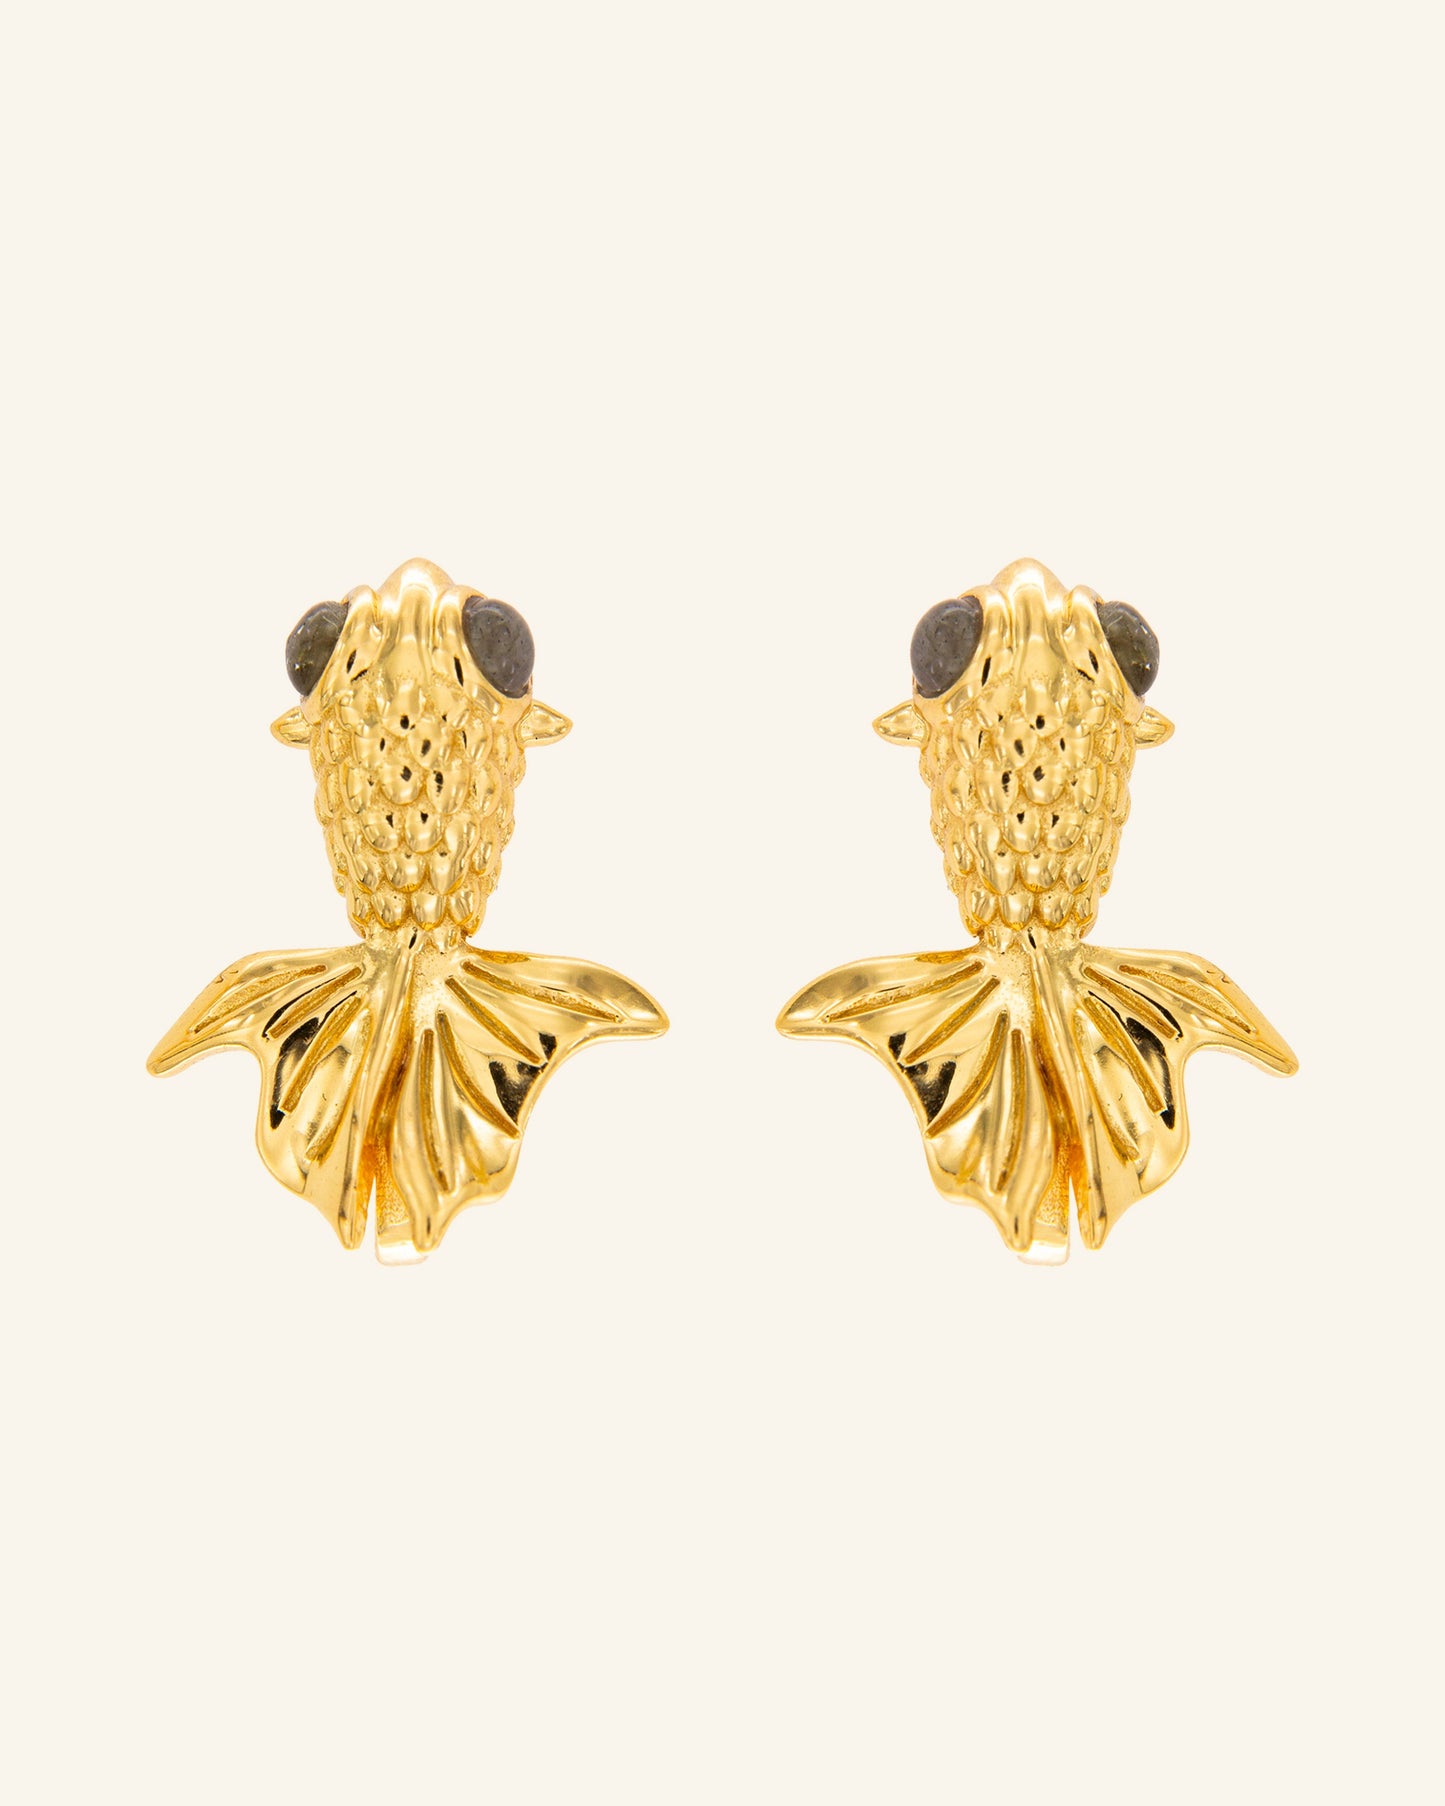 Liza Fish Earrings with Labradorite